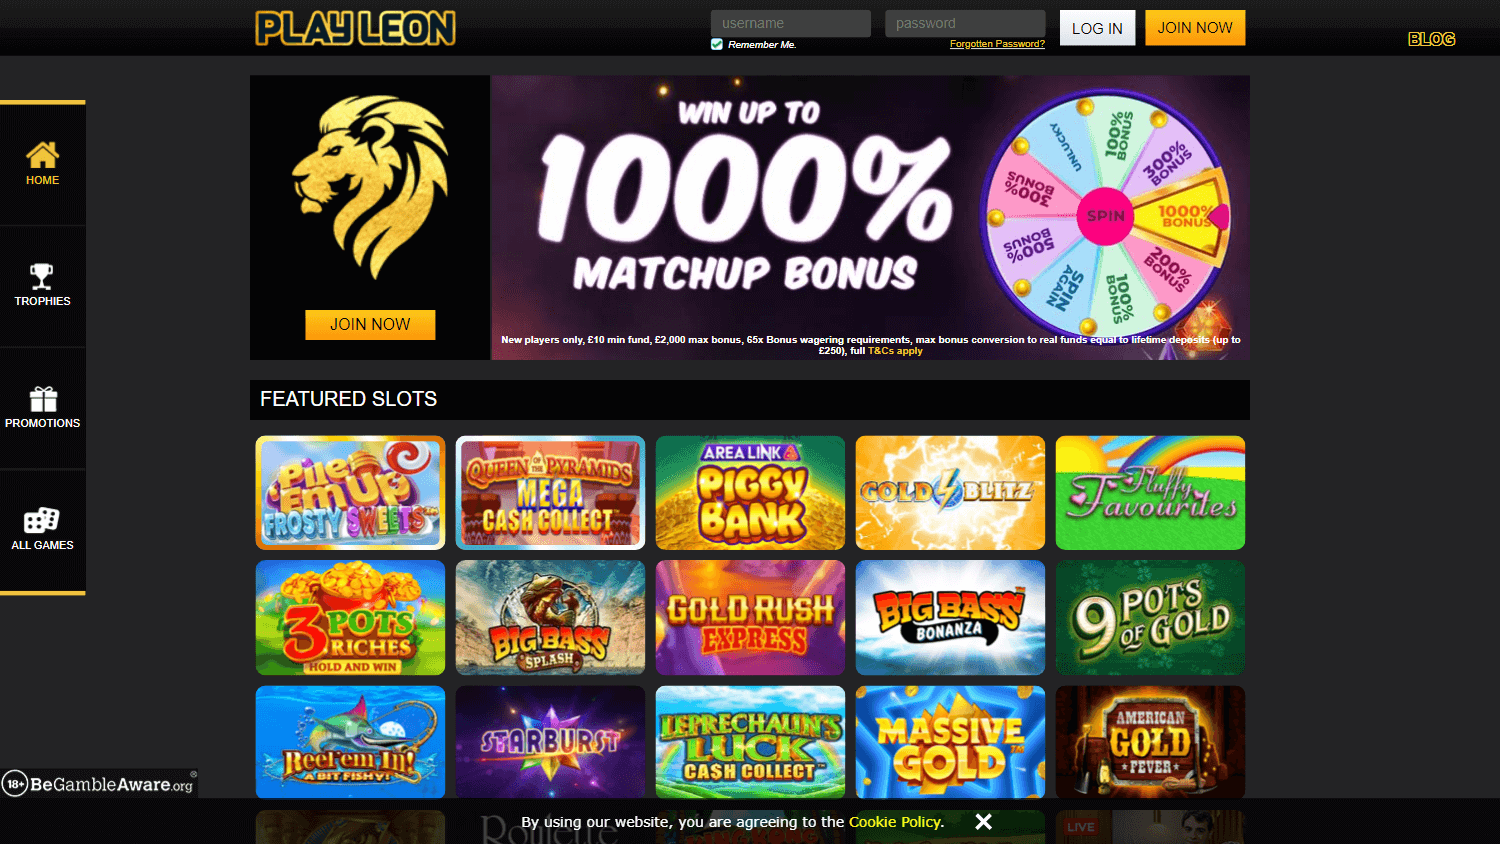 play_leon_casino_homepage_desktop